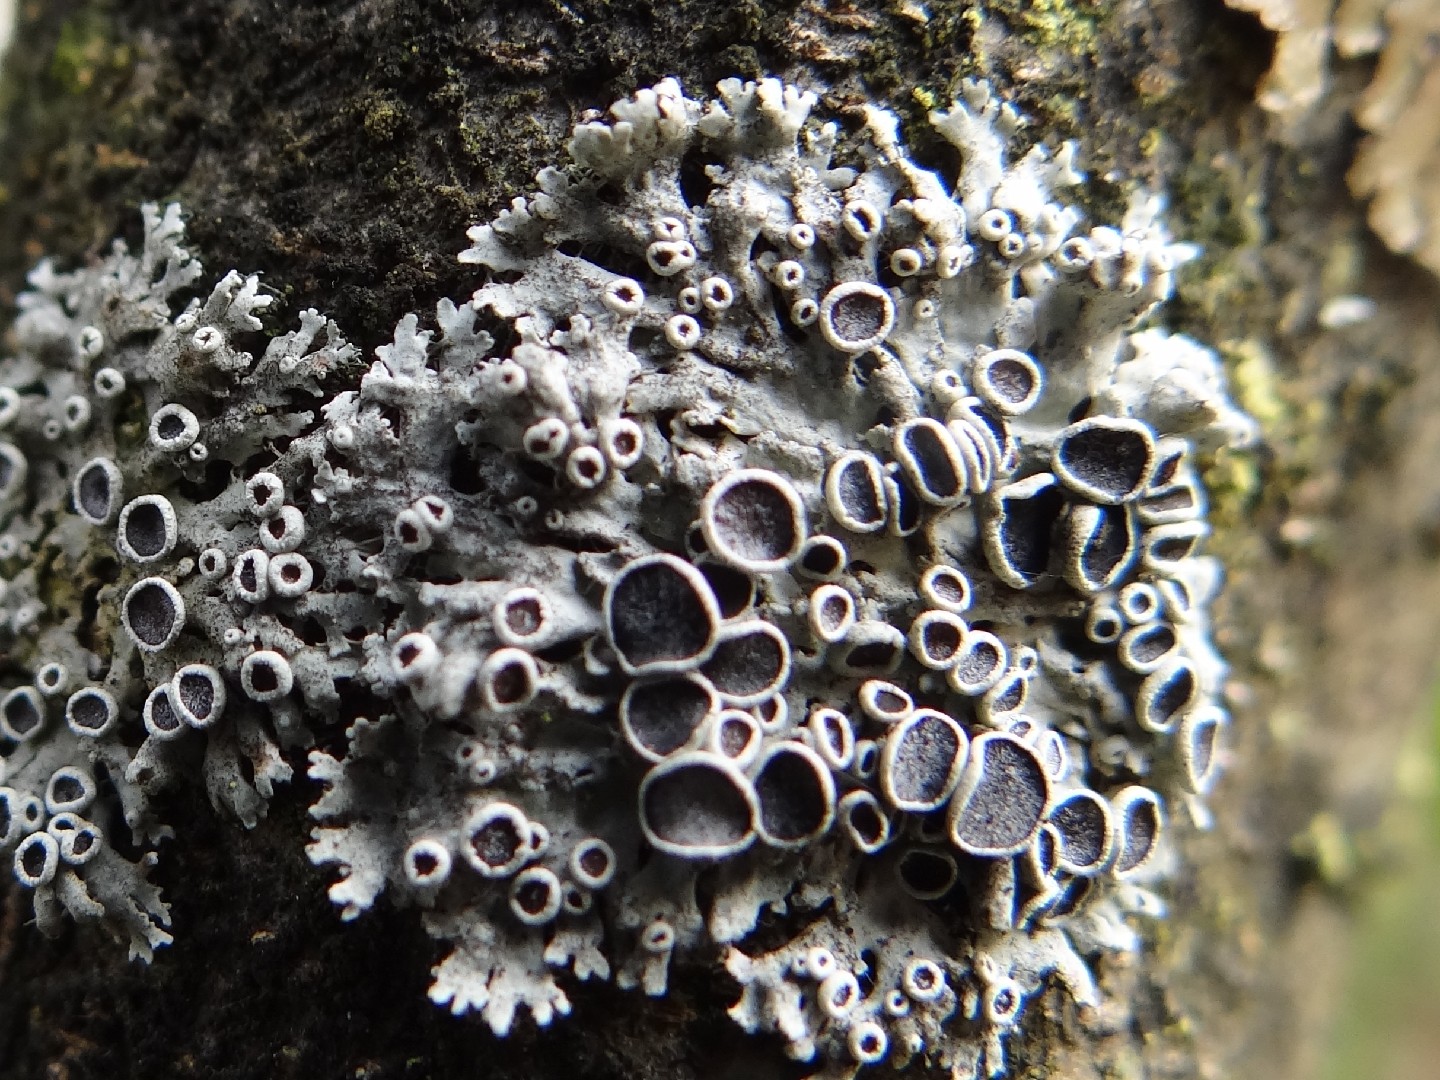 Star rosette lichen (Physcia stellaris)